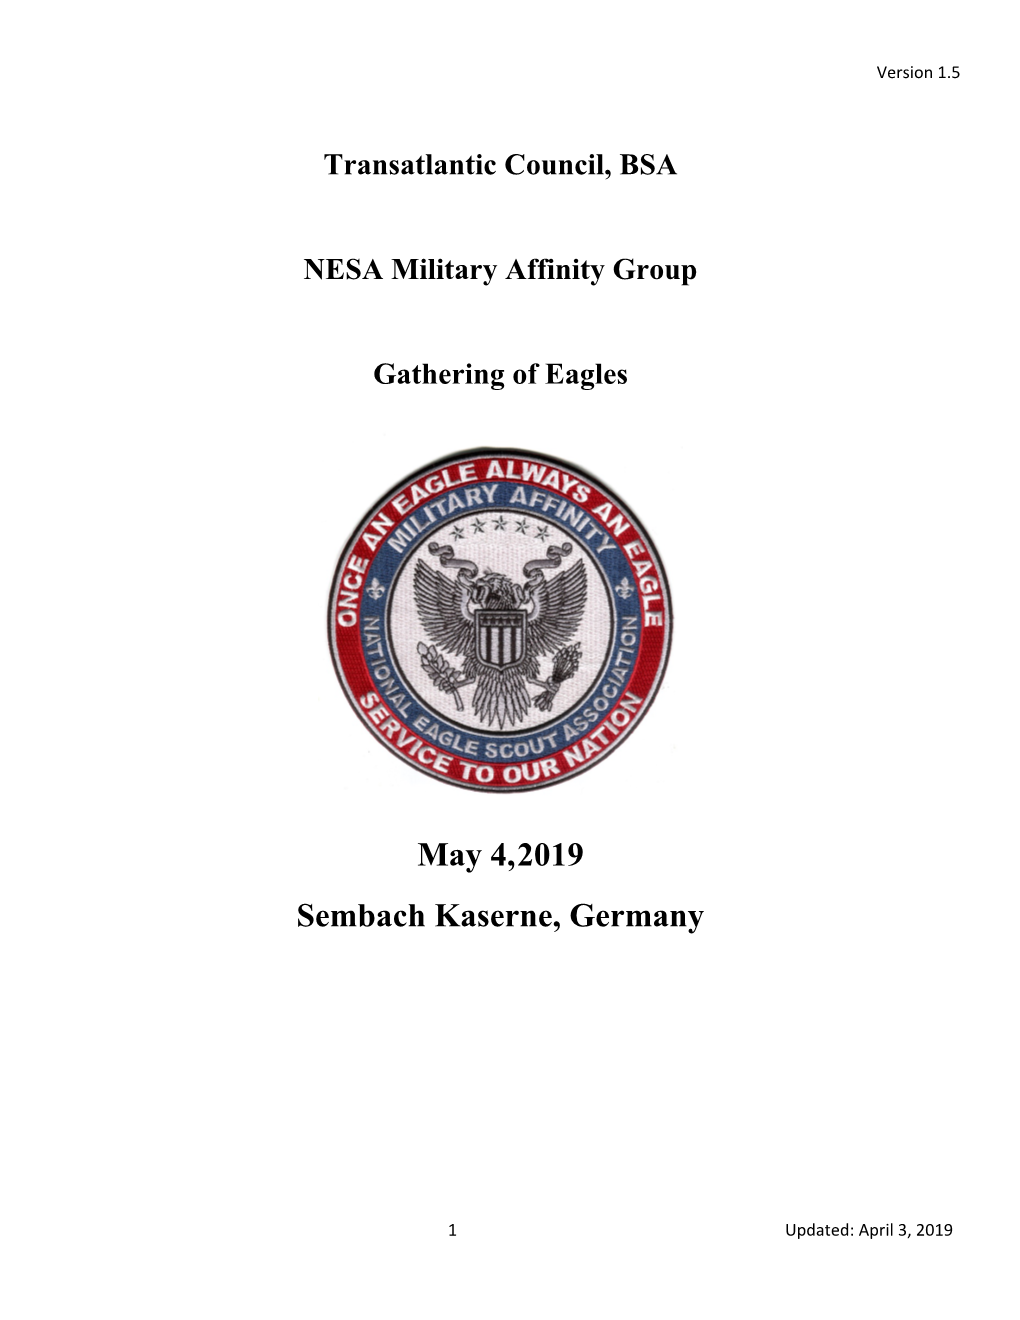 May 4, 2019 Sembach Kaserne, Germany